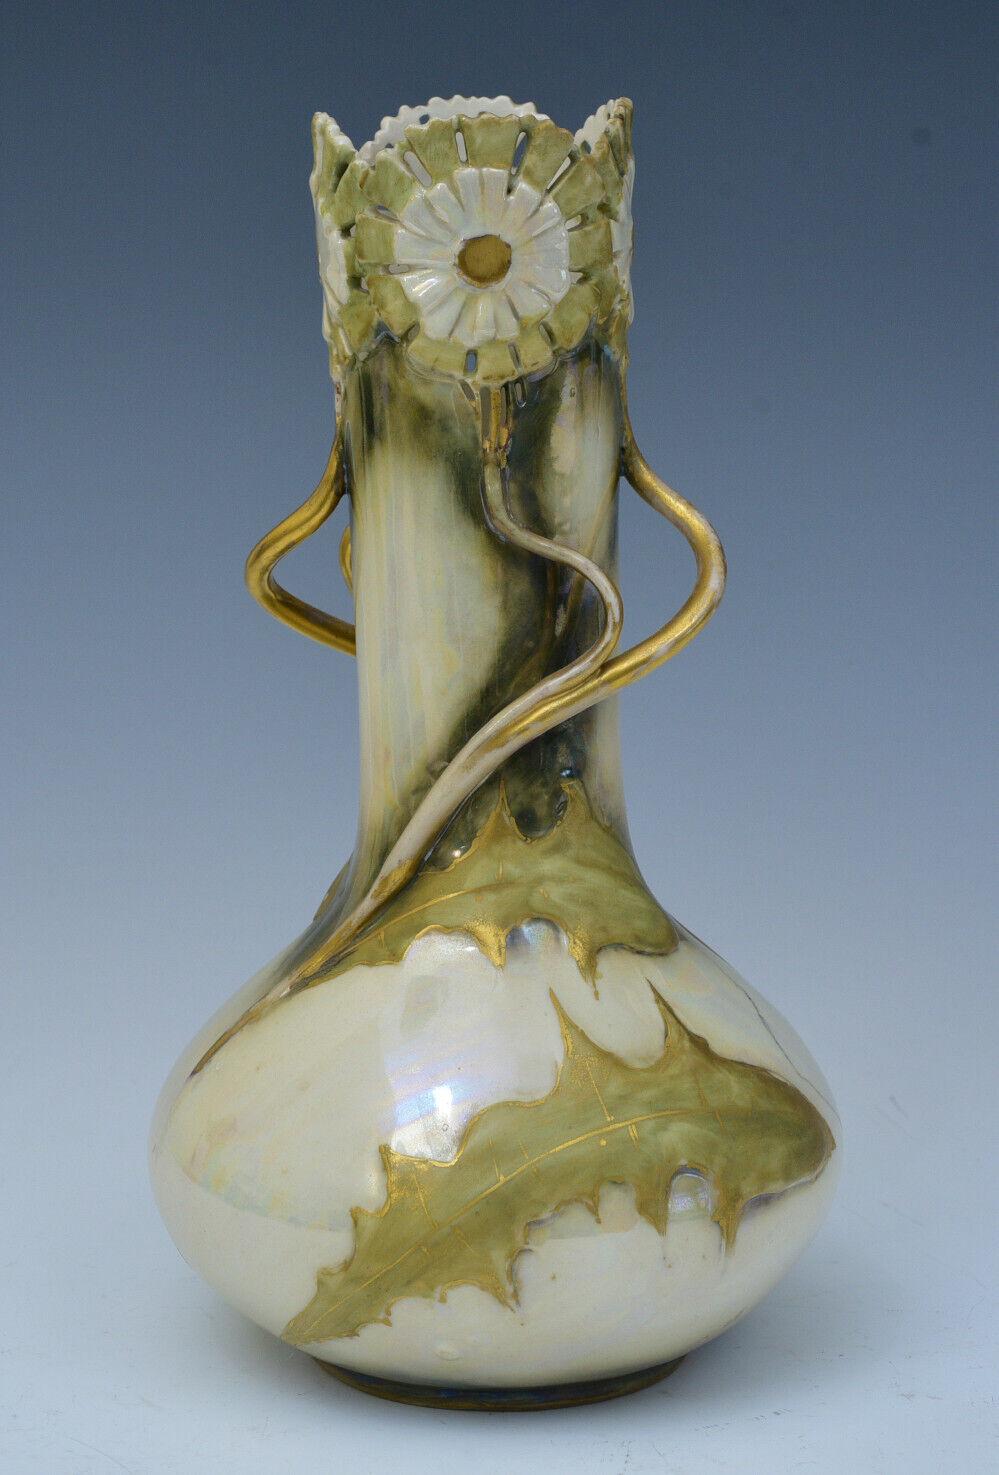 Amphora Turn Teplitz RSTK Porcelain Vase, circa 1900 (CRACK)